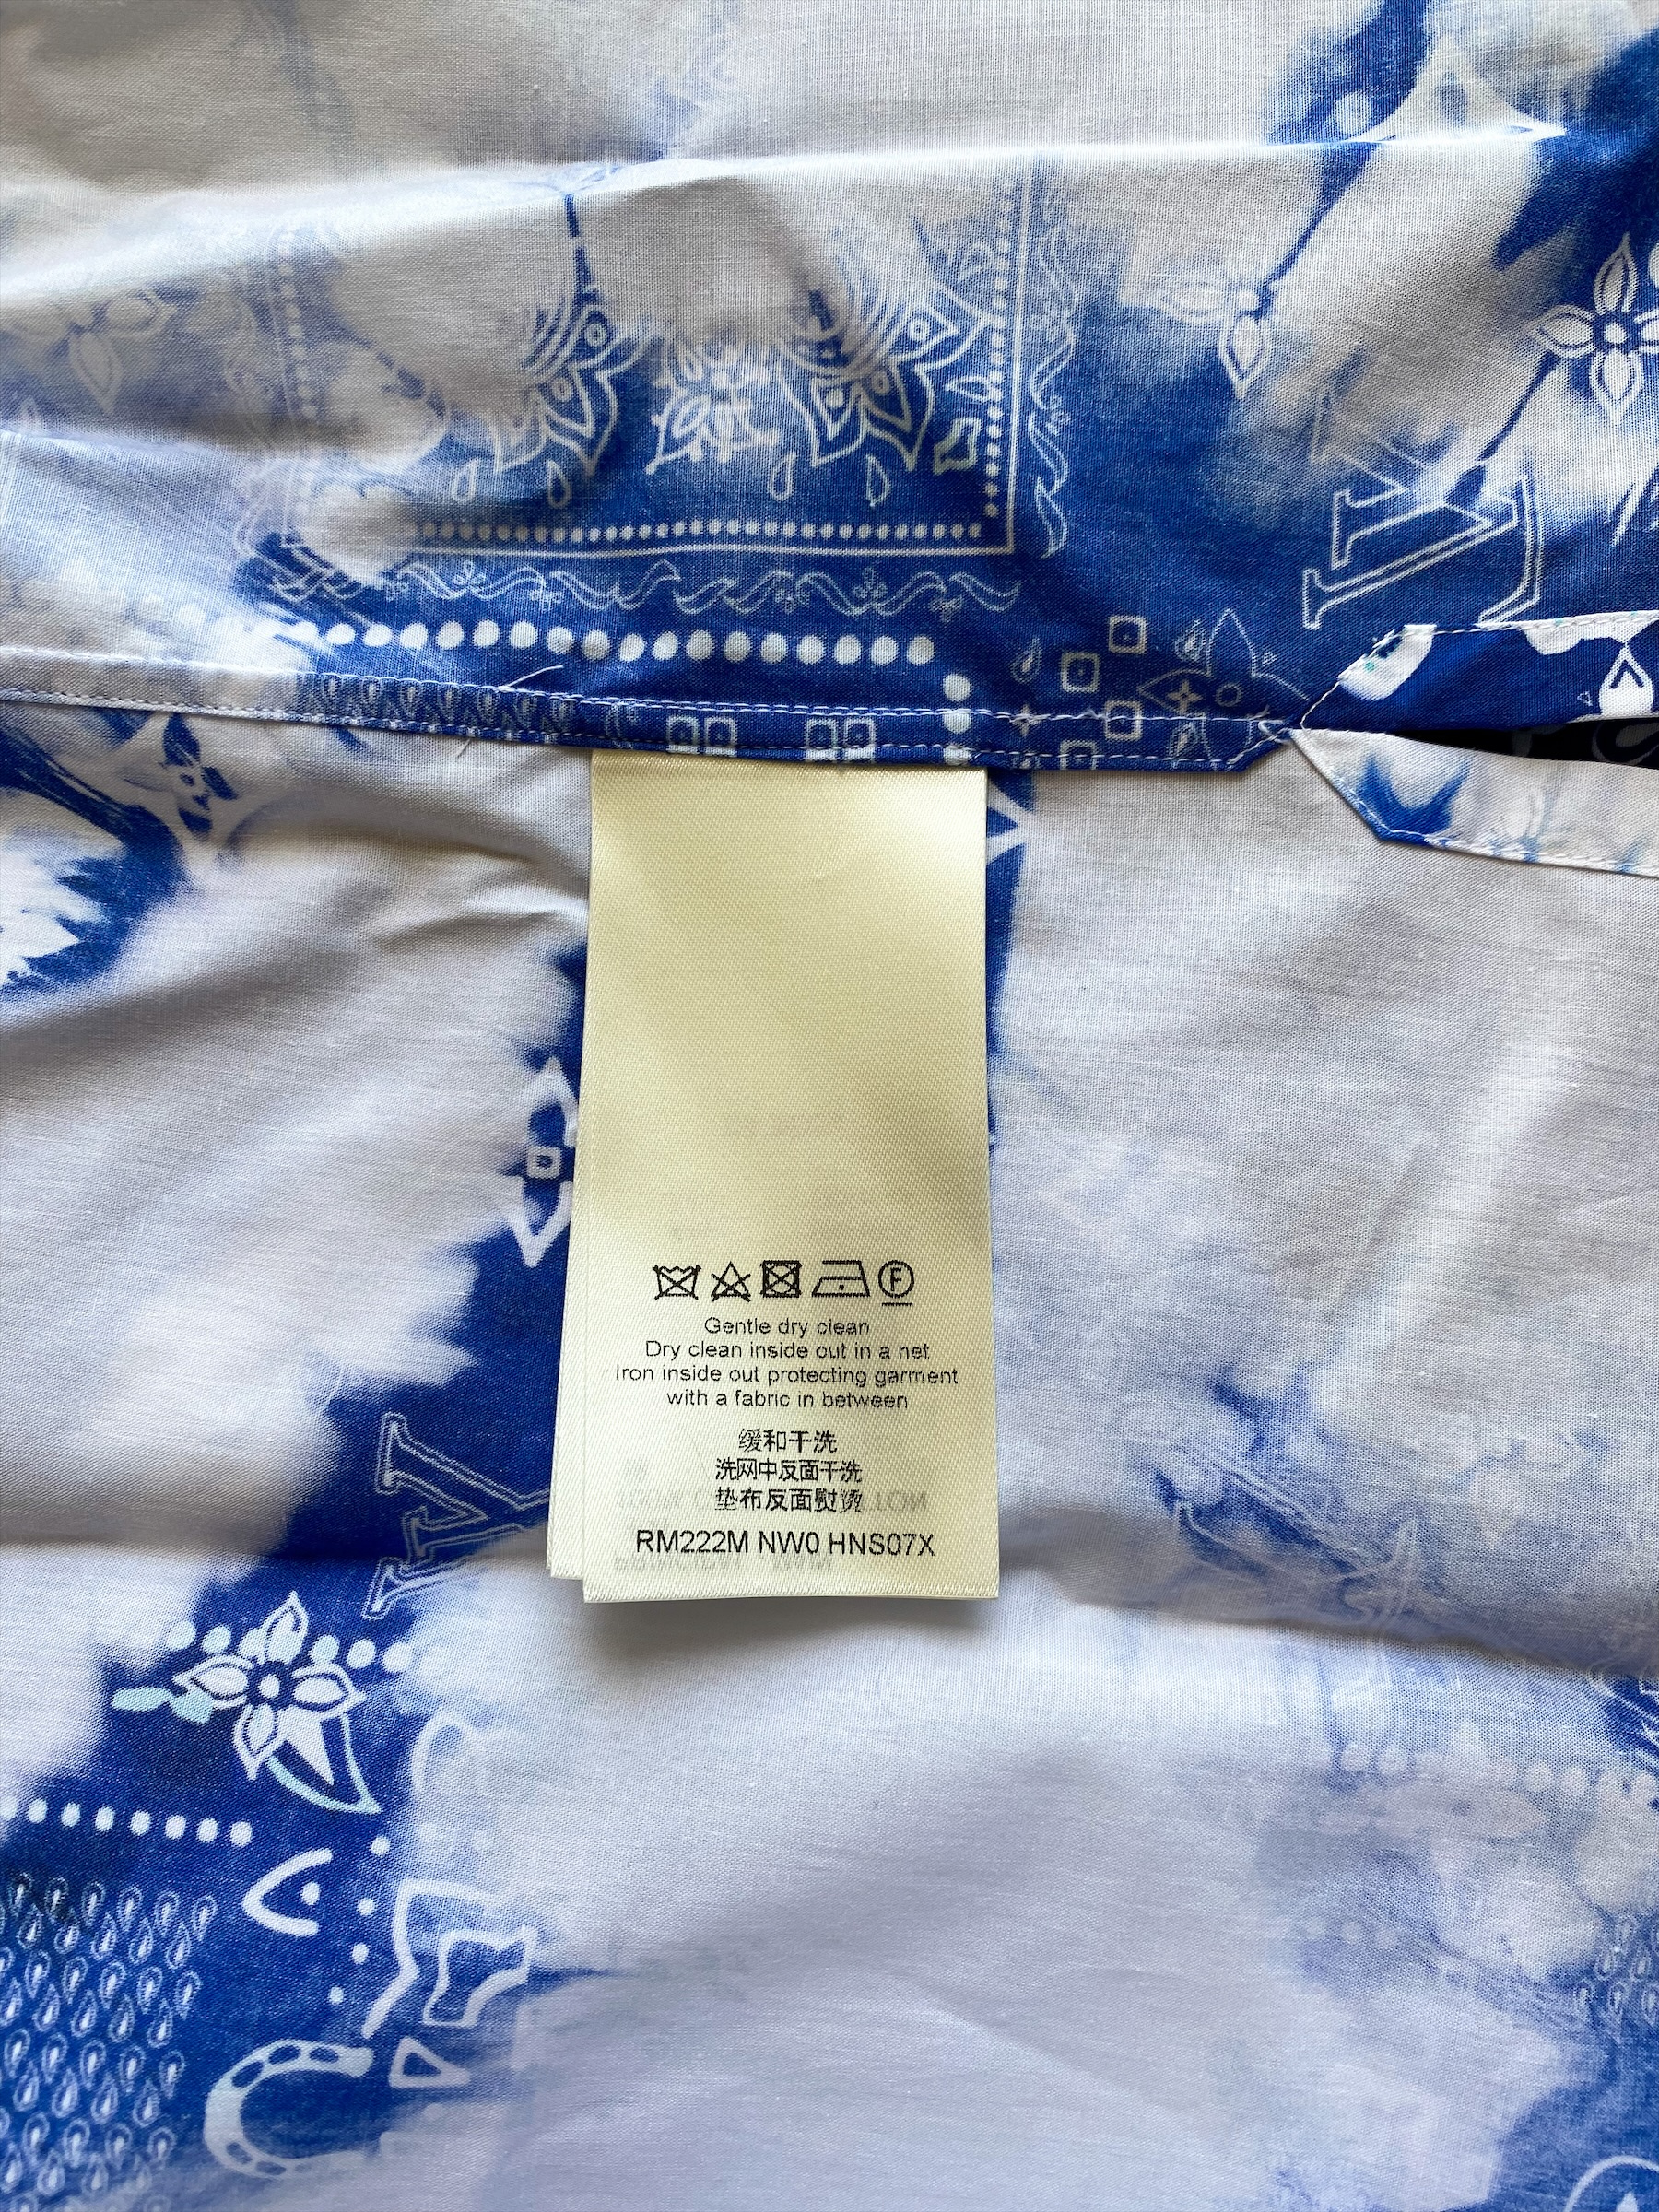 Louis Vuitton Monogram Bandana Short Sleeve Shirt Bleached Blue